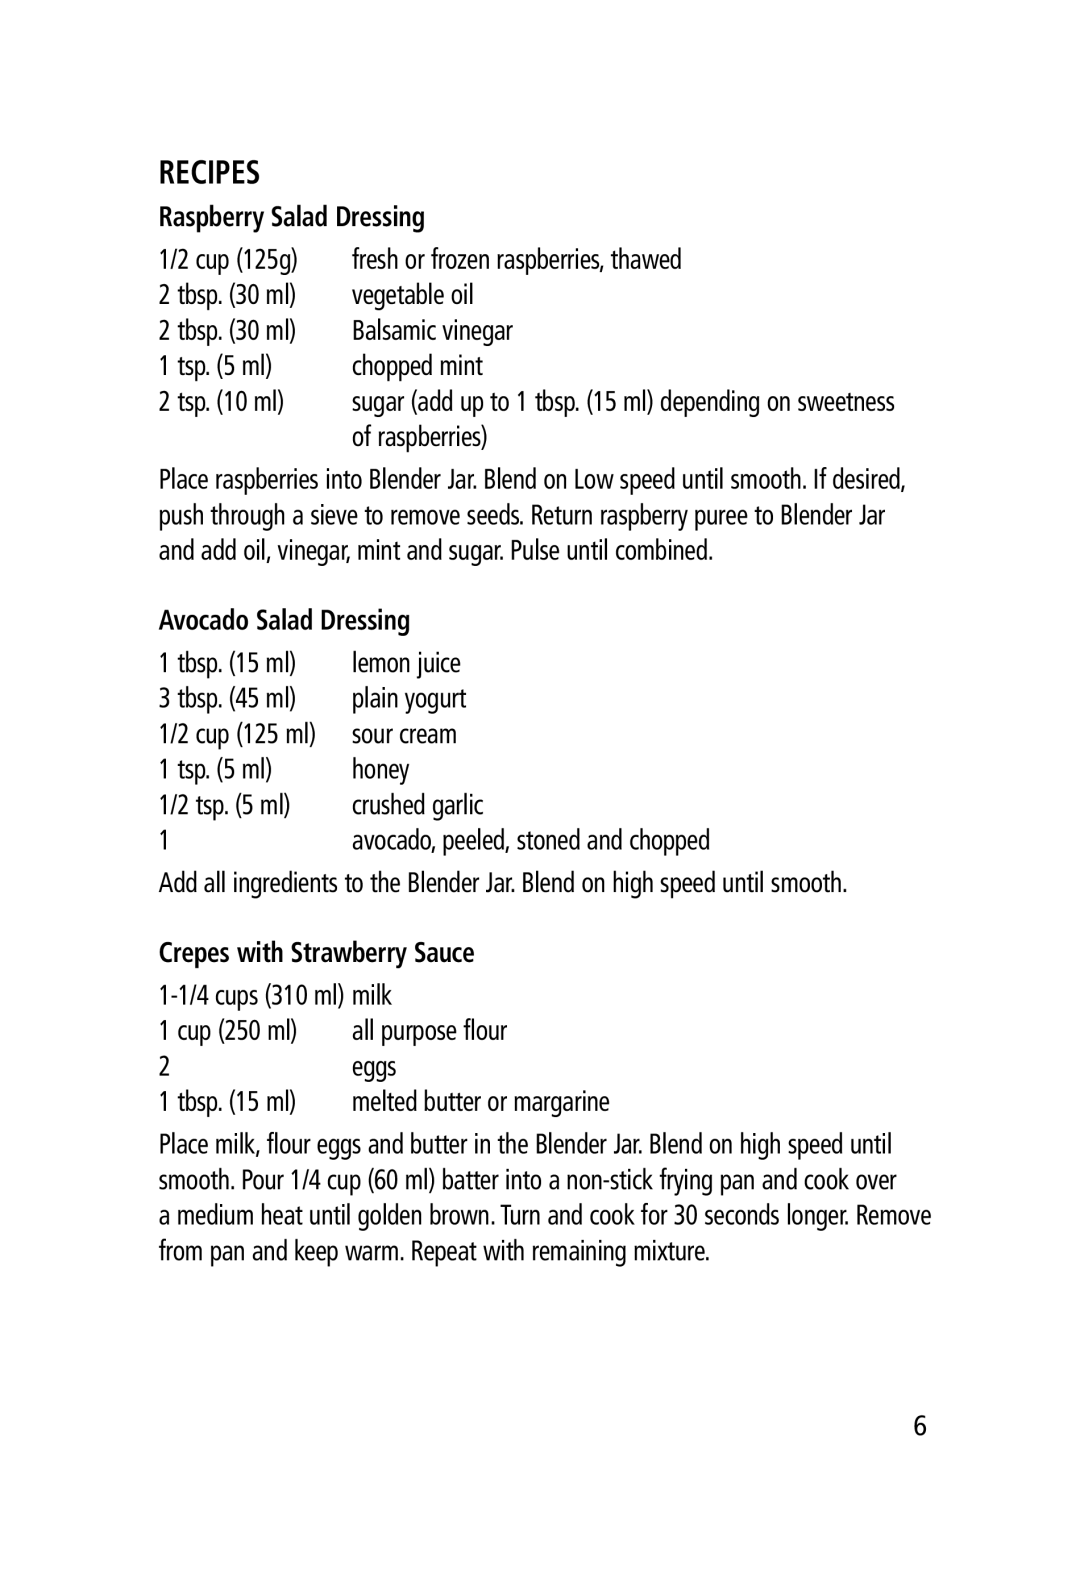 Salton BL-1051 manual Recipes, Raspberry Salad Dressing, Avocado Salad Dressing 